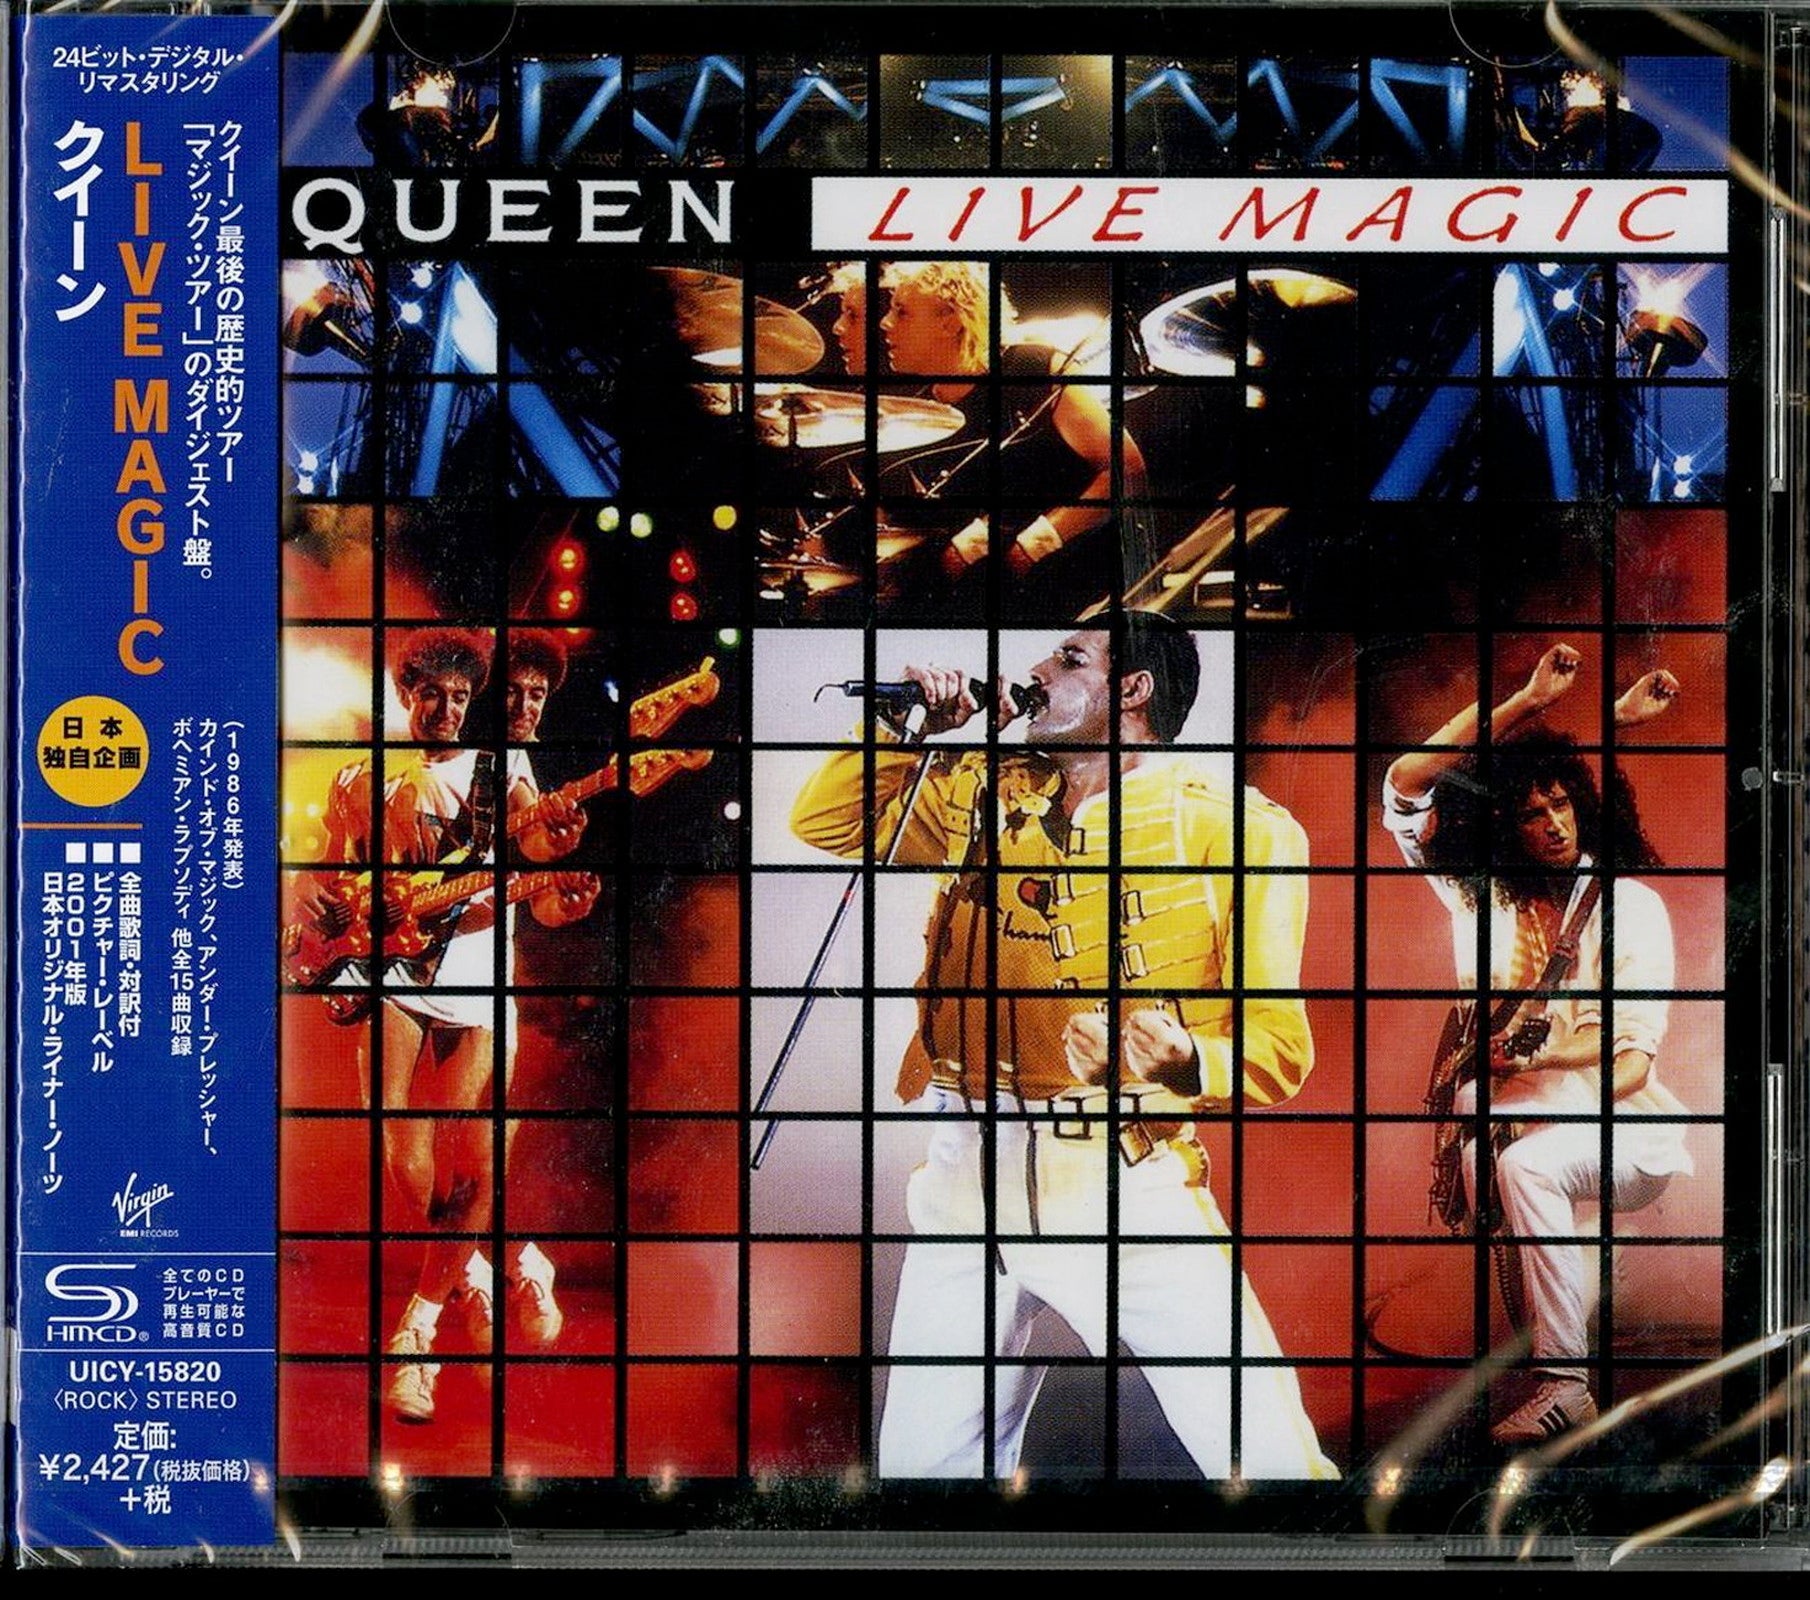 Queen Live Magic Japan SHM-CD CDs Vinyl Japan Store